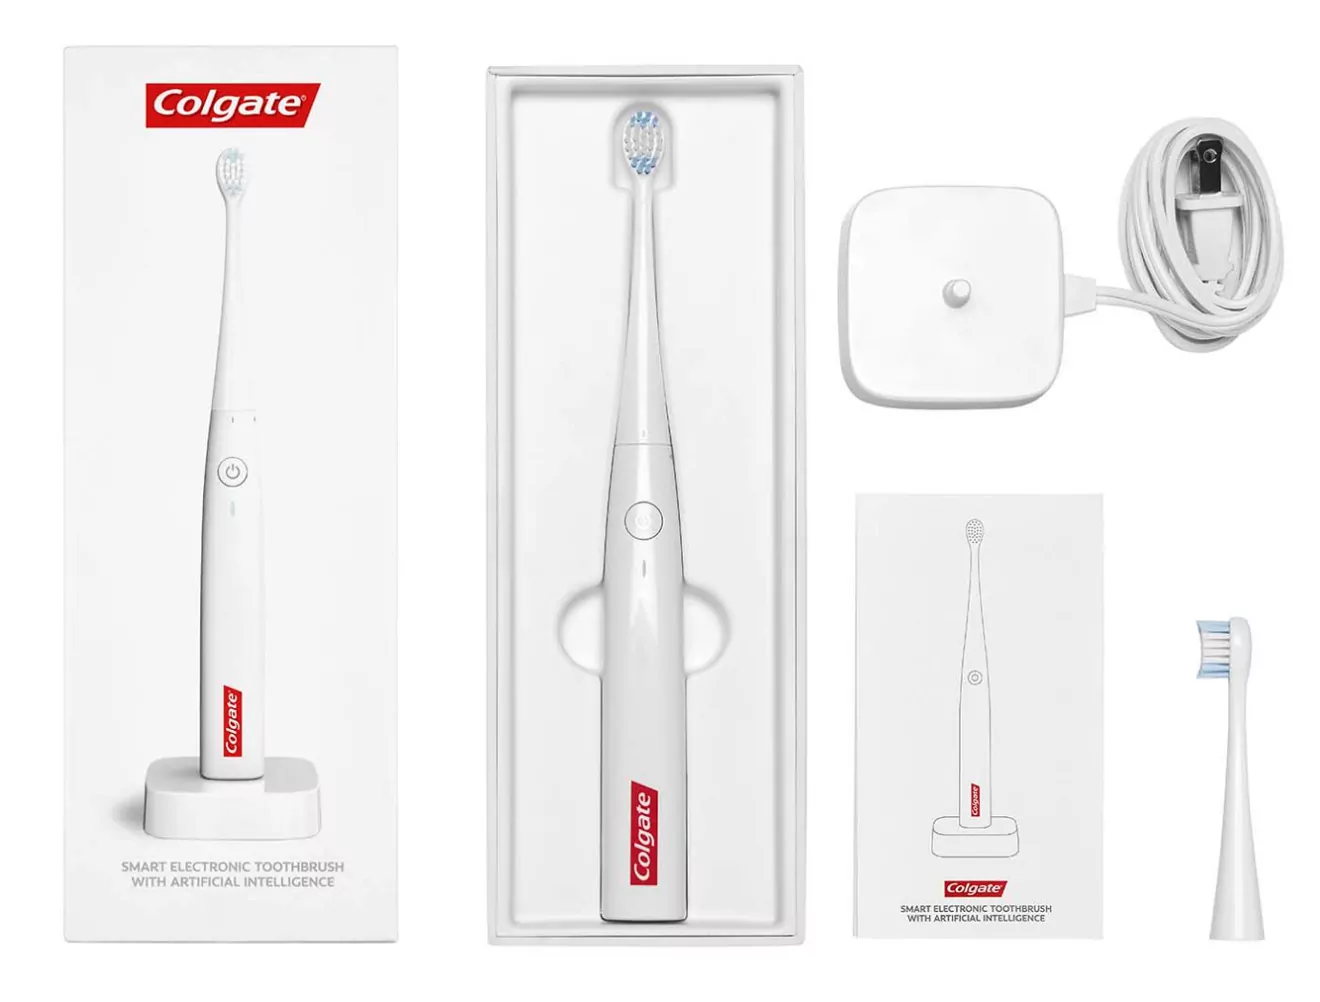 Colgate Smart Electric Toothbrush Survey